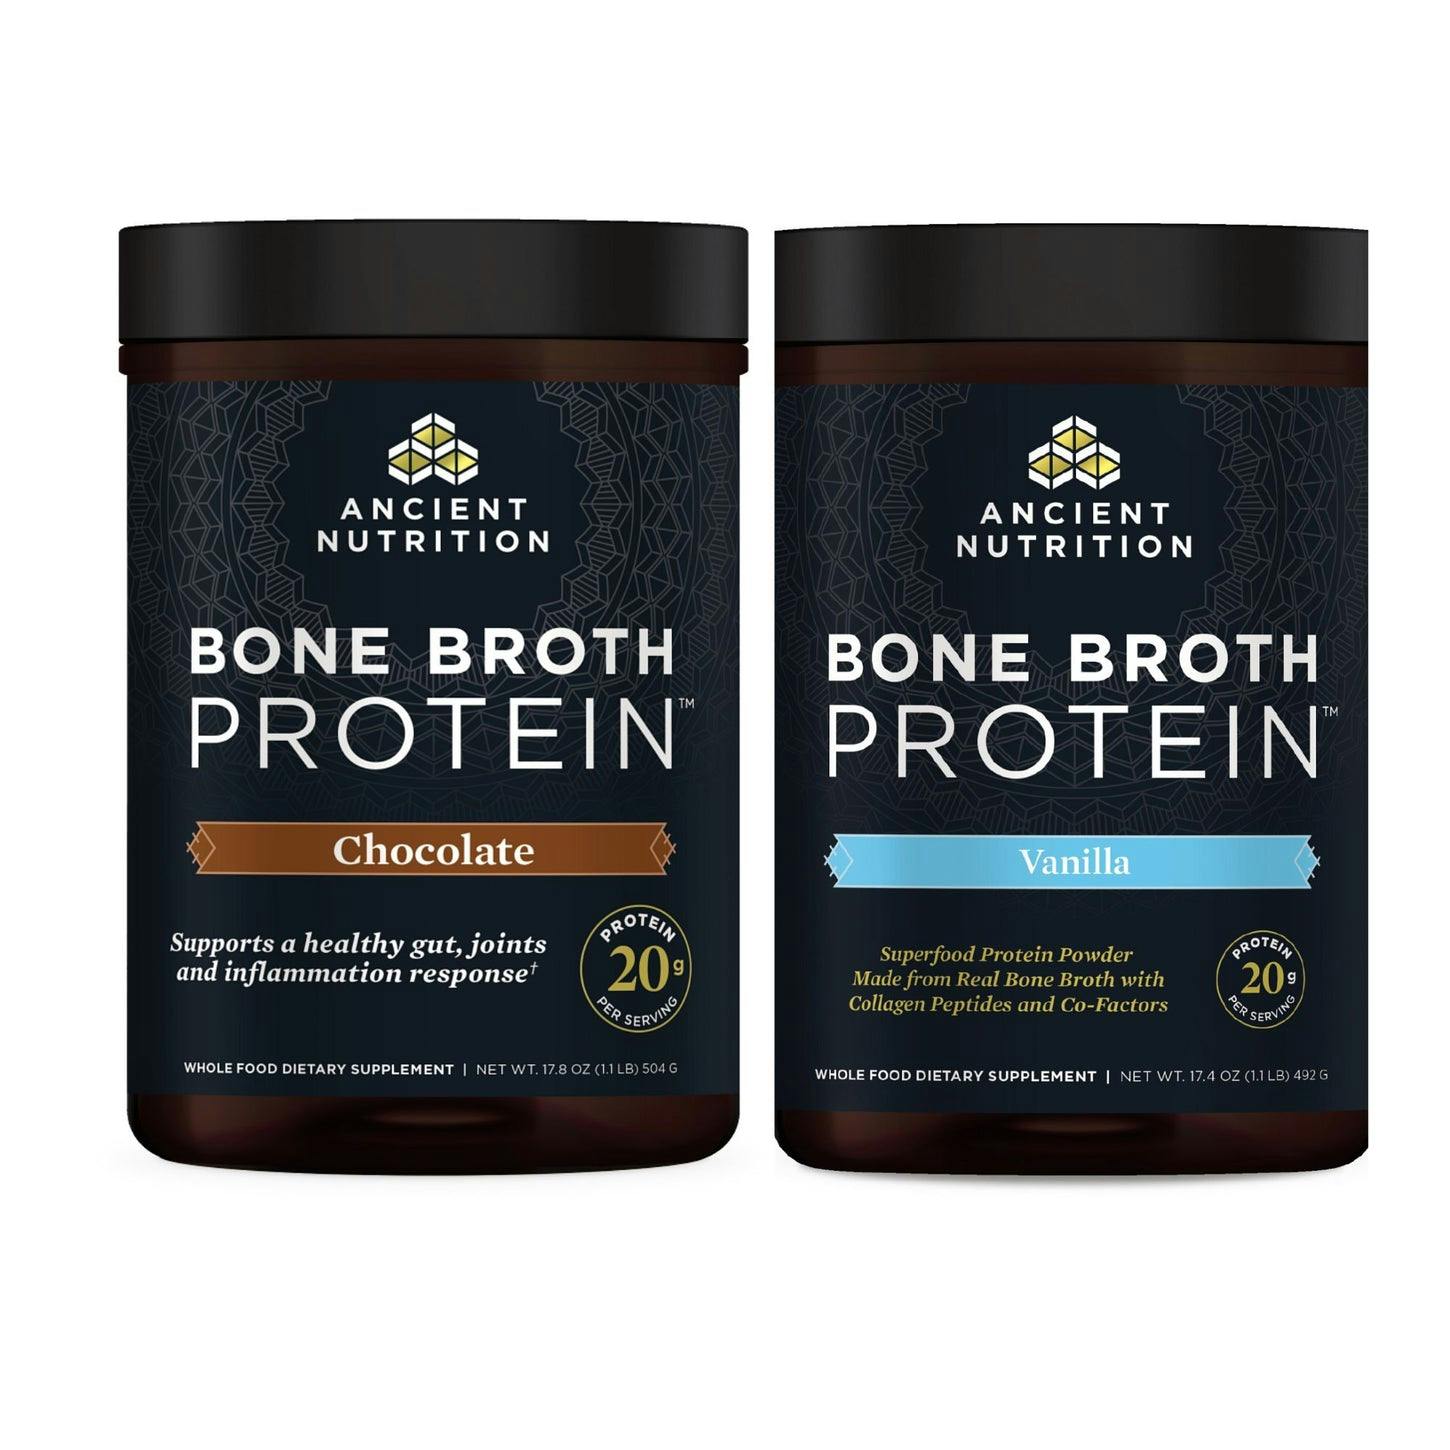 bone broth protein chocolate and vanilla bottles